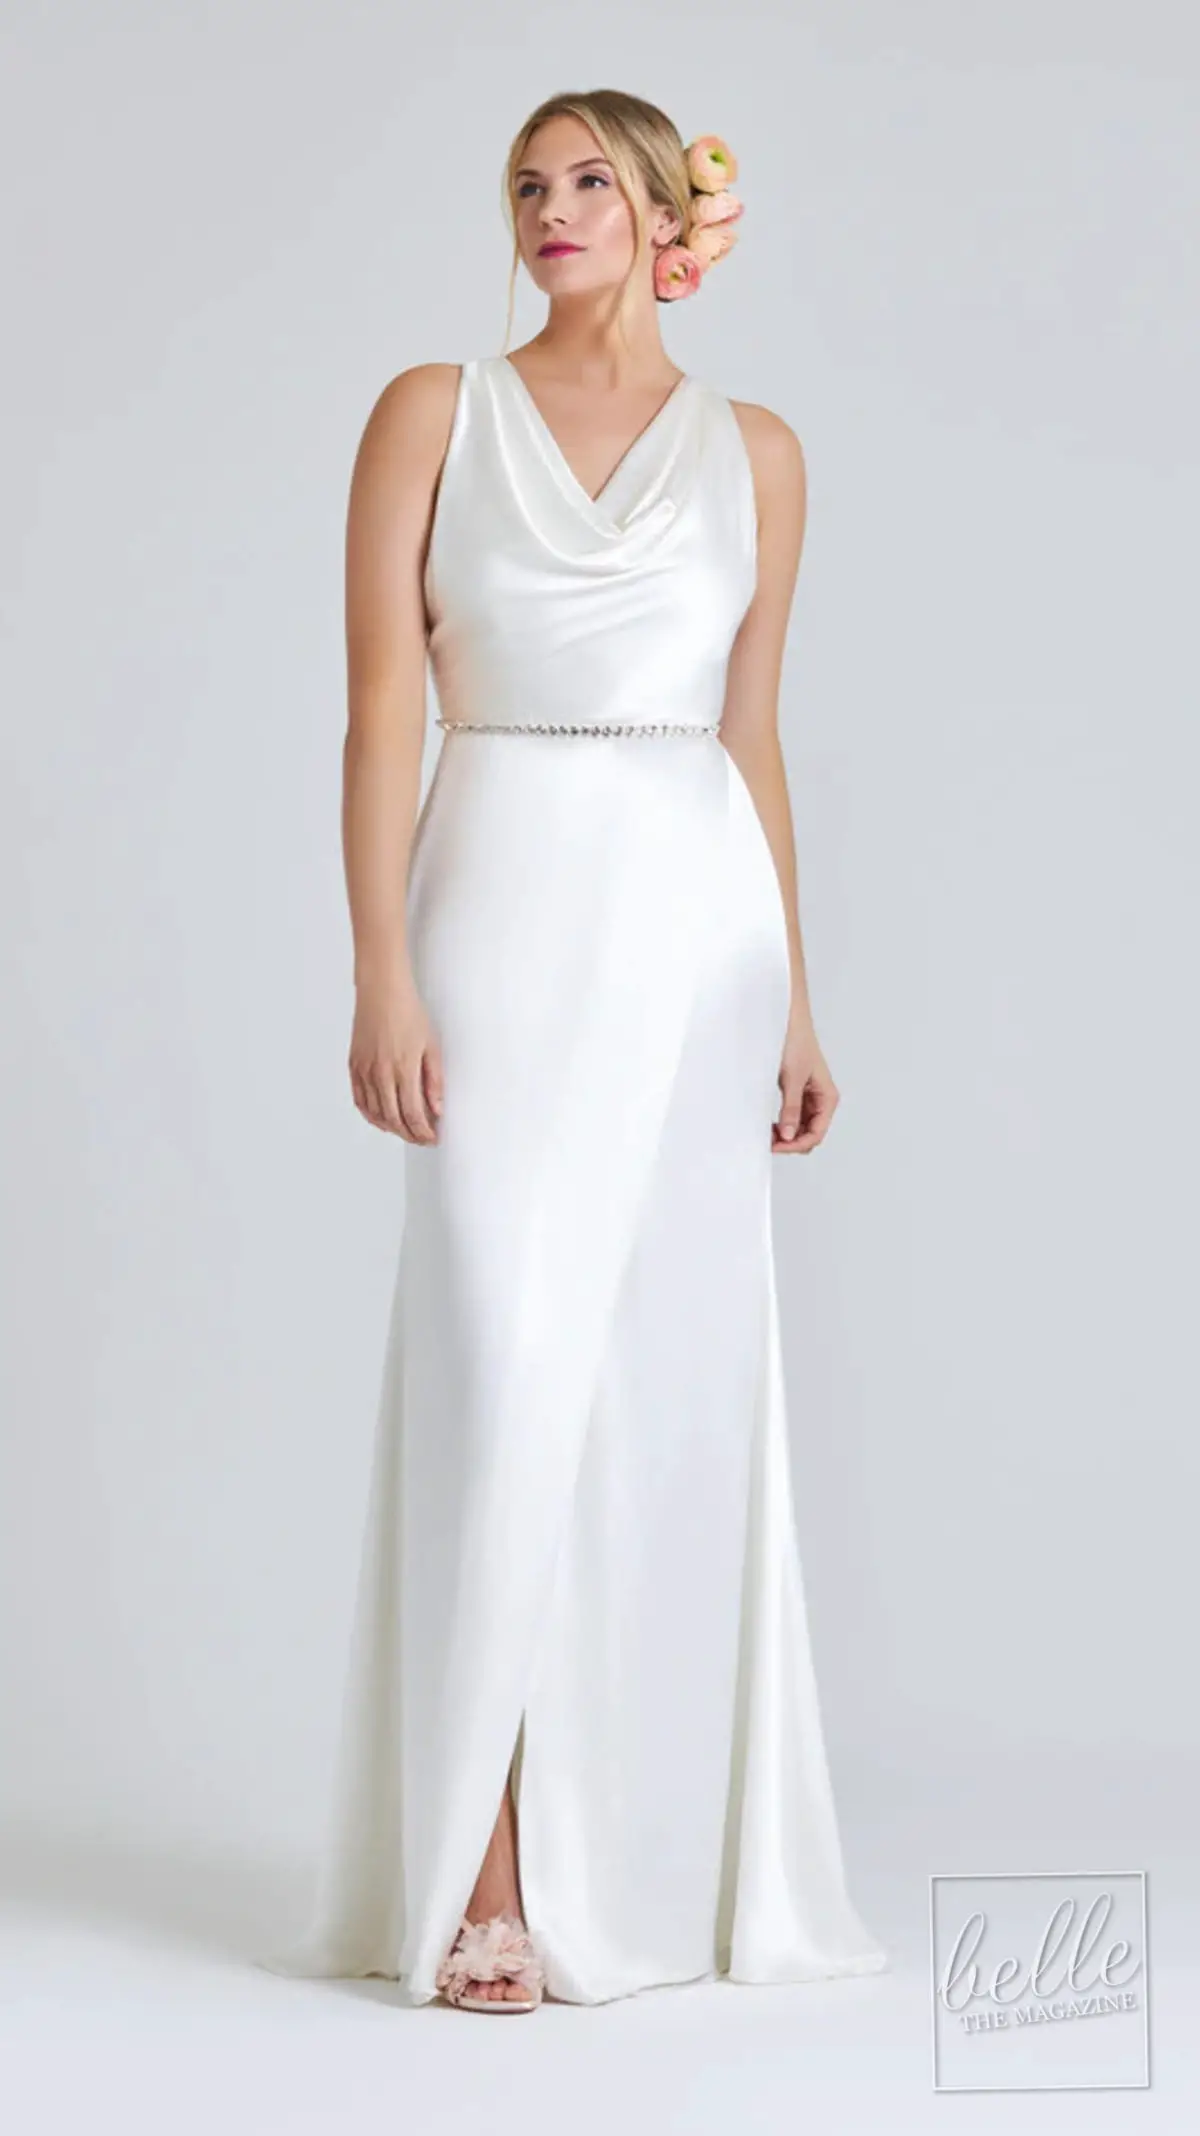 Wedding dress trends 2021 - Minimalist gown - KOSIBAH